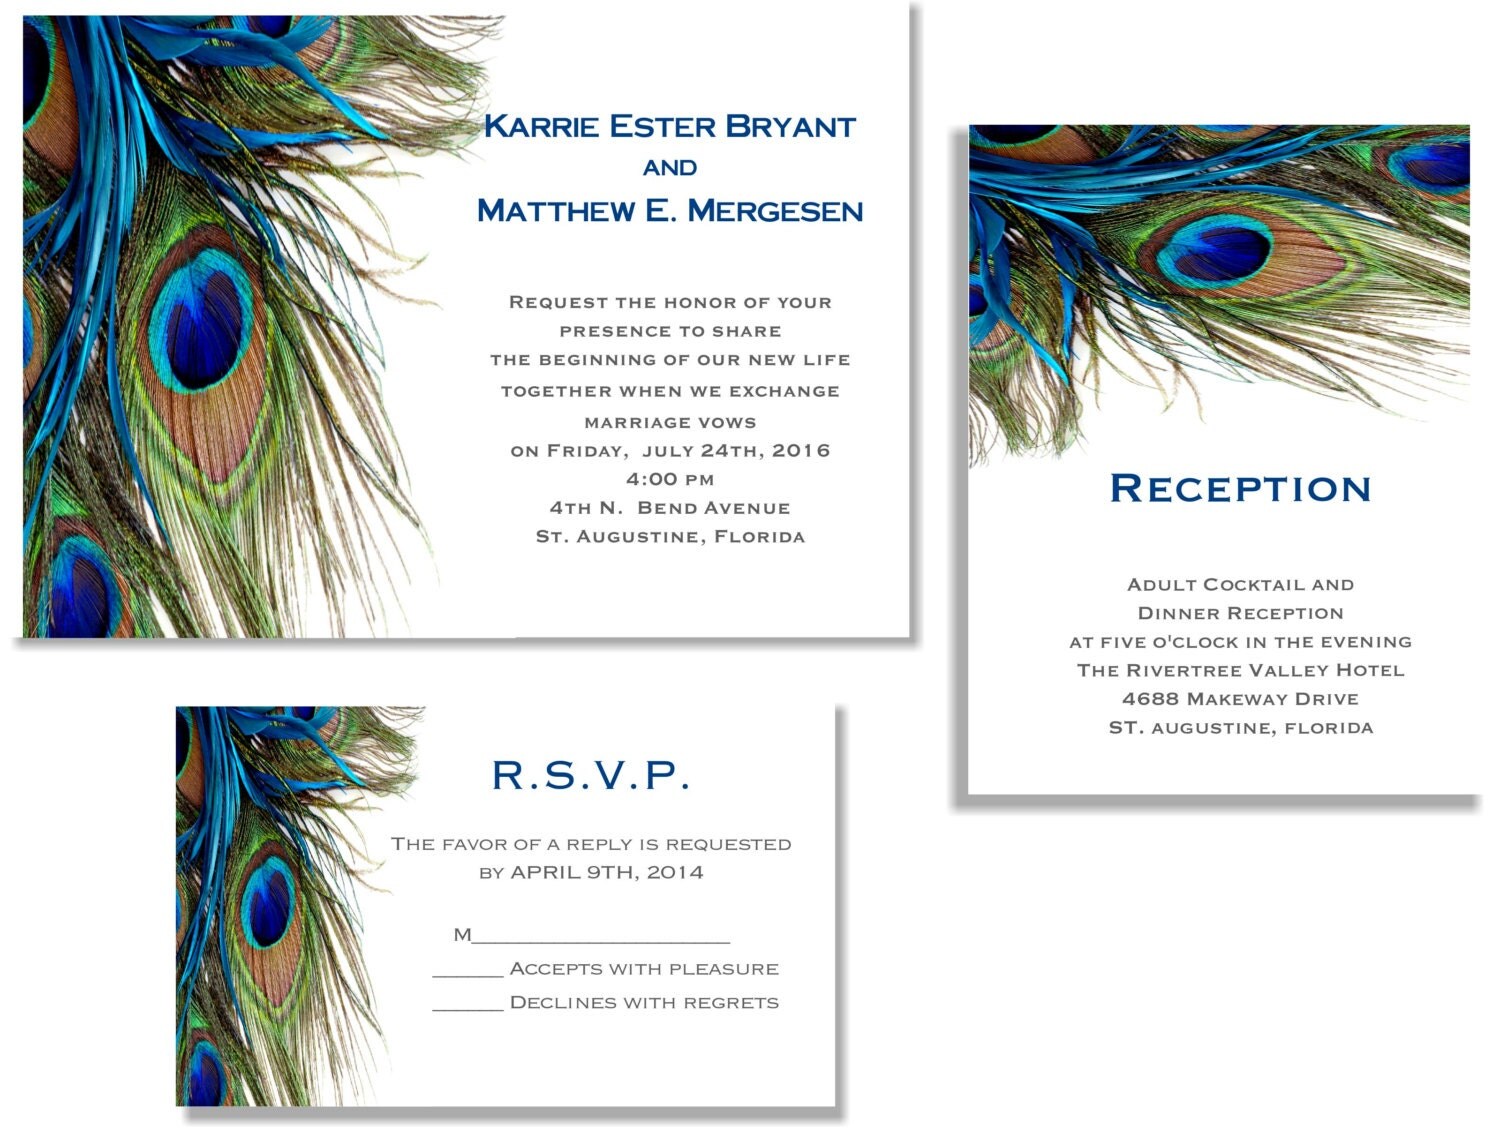 maryarfah-peacock-design-wedding-invitations